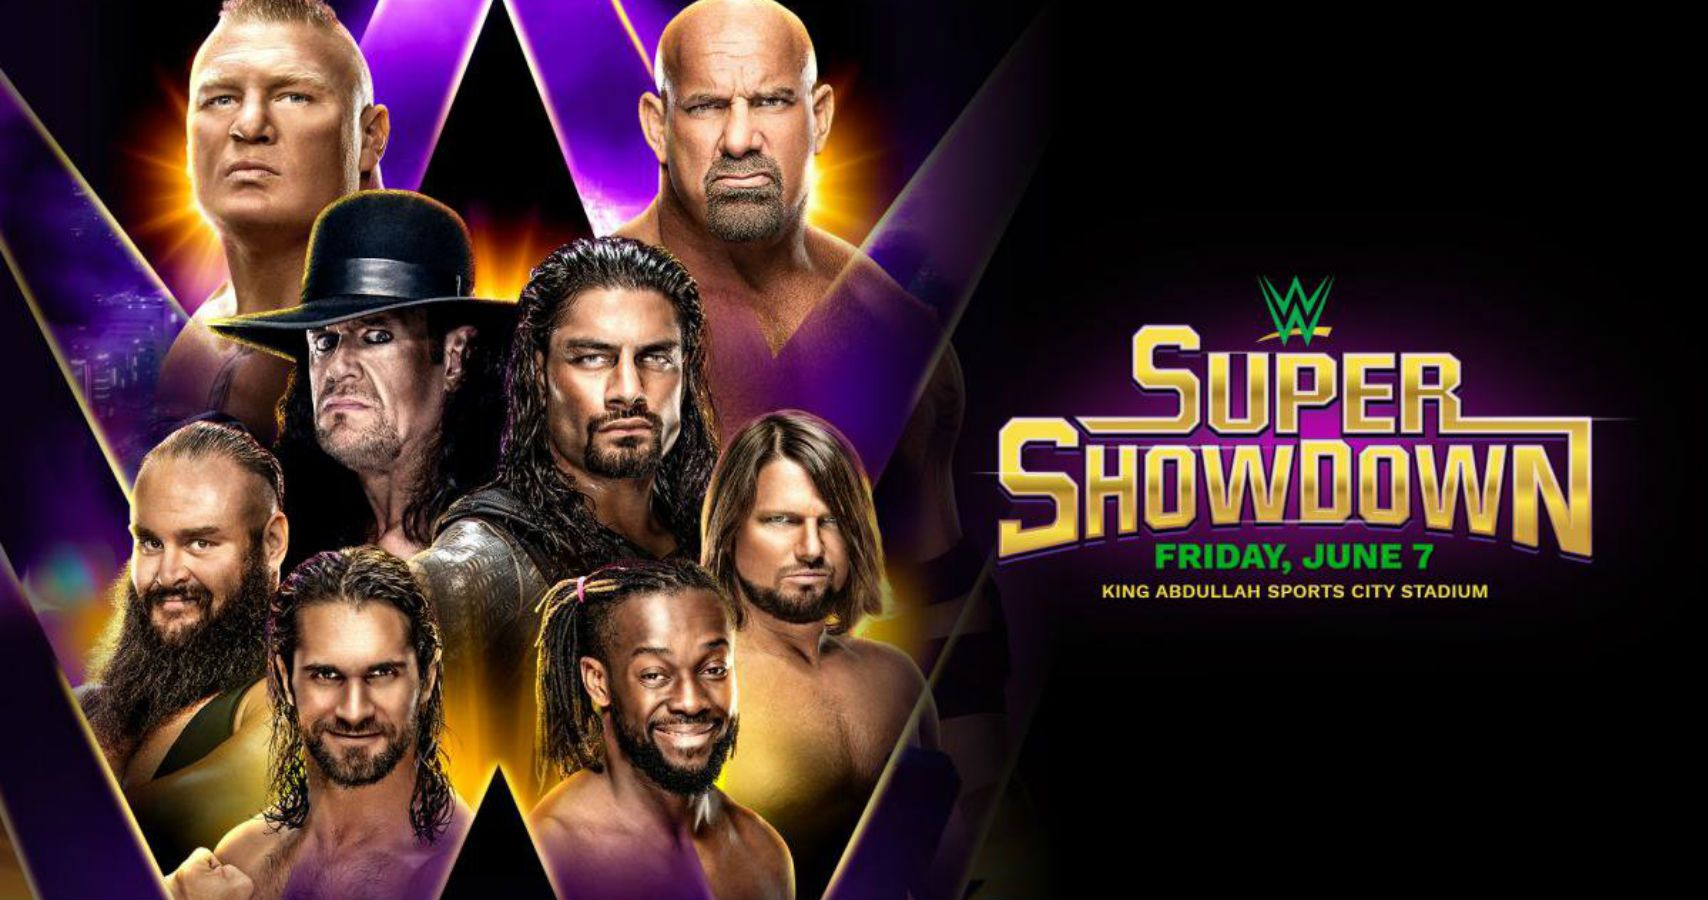 WWE Super Showdown 2019 Match Card, Start Time, & How To Watch